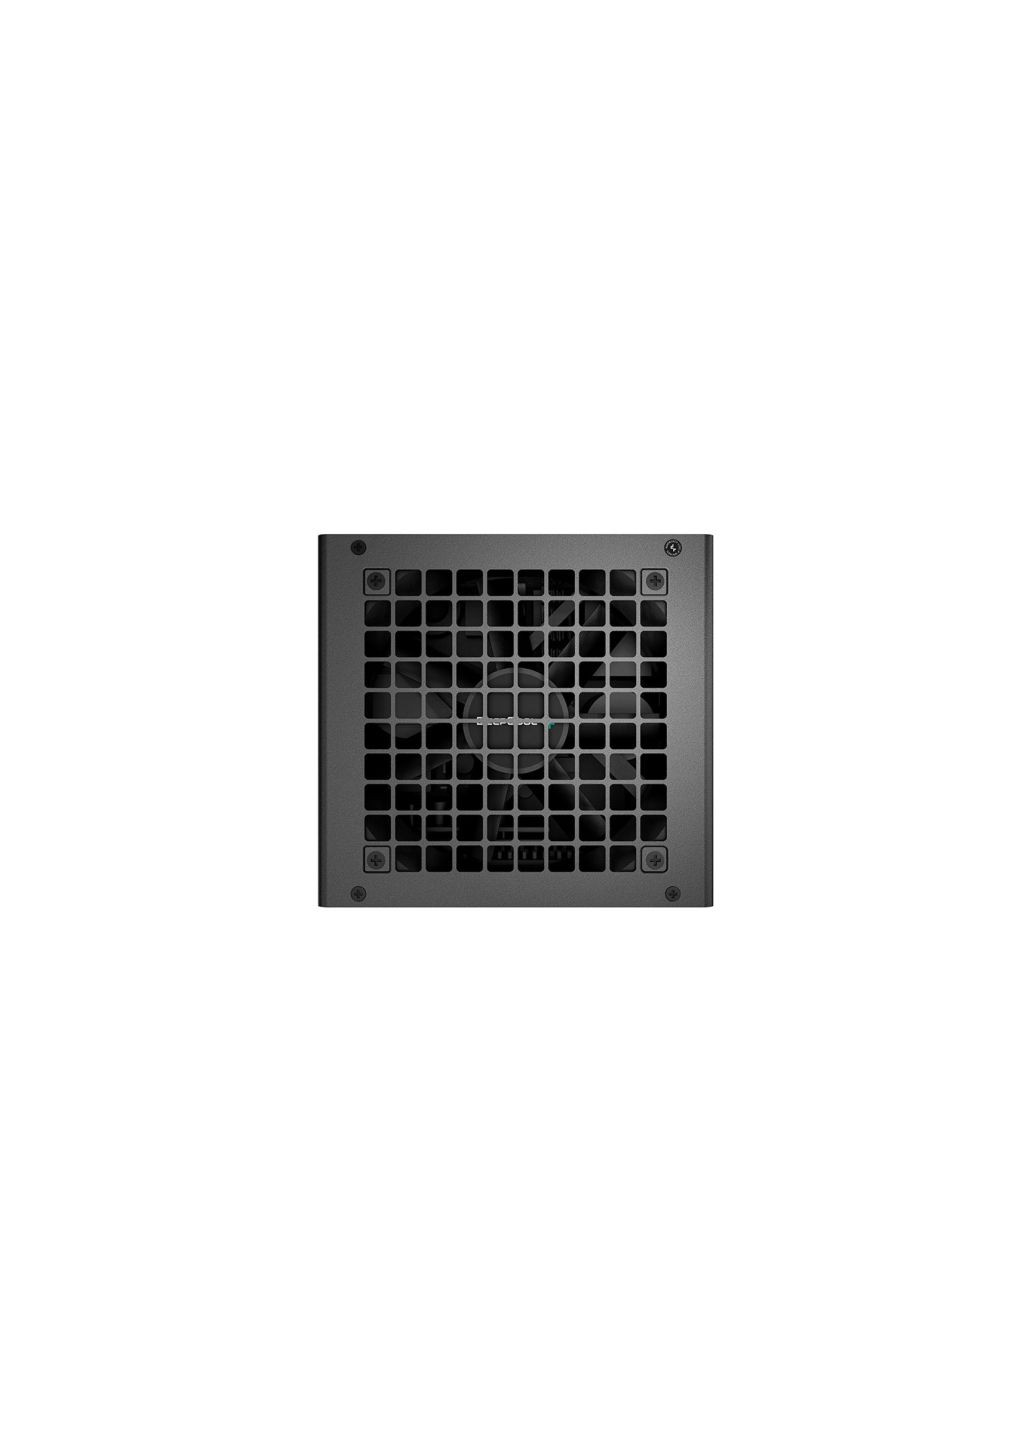 Блок питания (RPQA00M-FA0B-EU) DeepCool 1000w pq1000m (275080551)